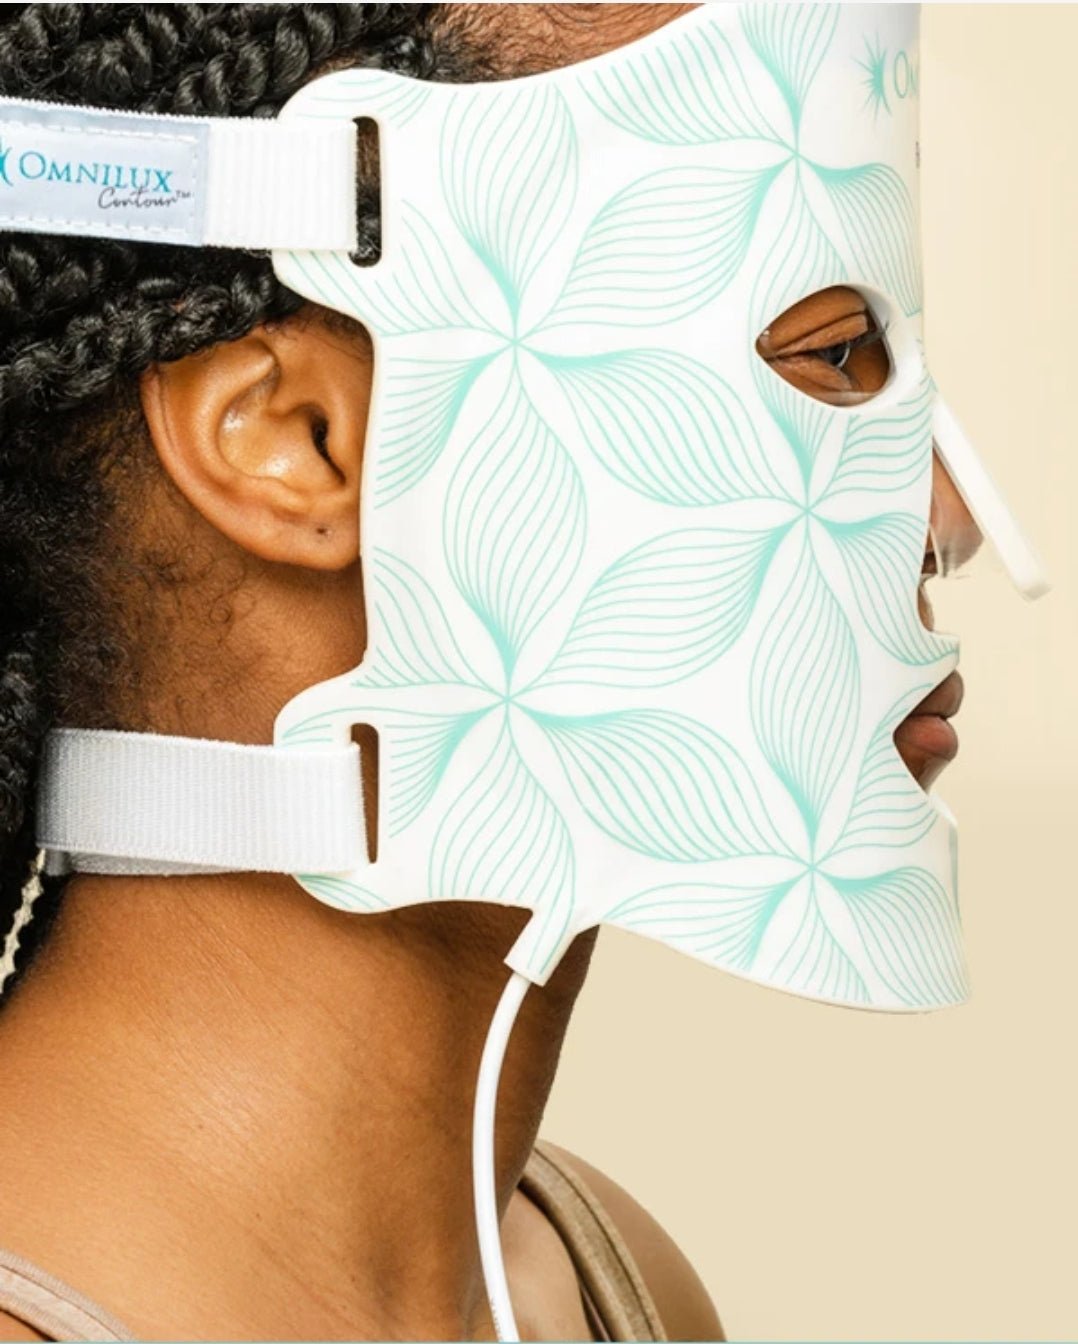 Omnilux Contour FACE LED Home Treatment Mask **Top Seller** - Exquisite Laser Clinic